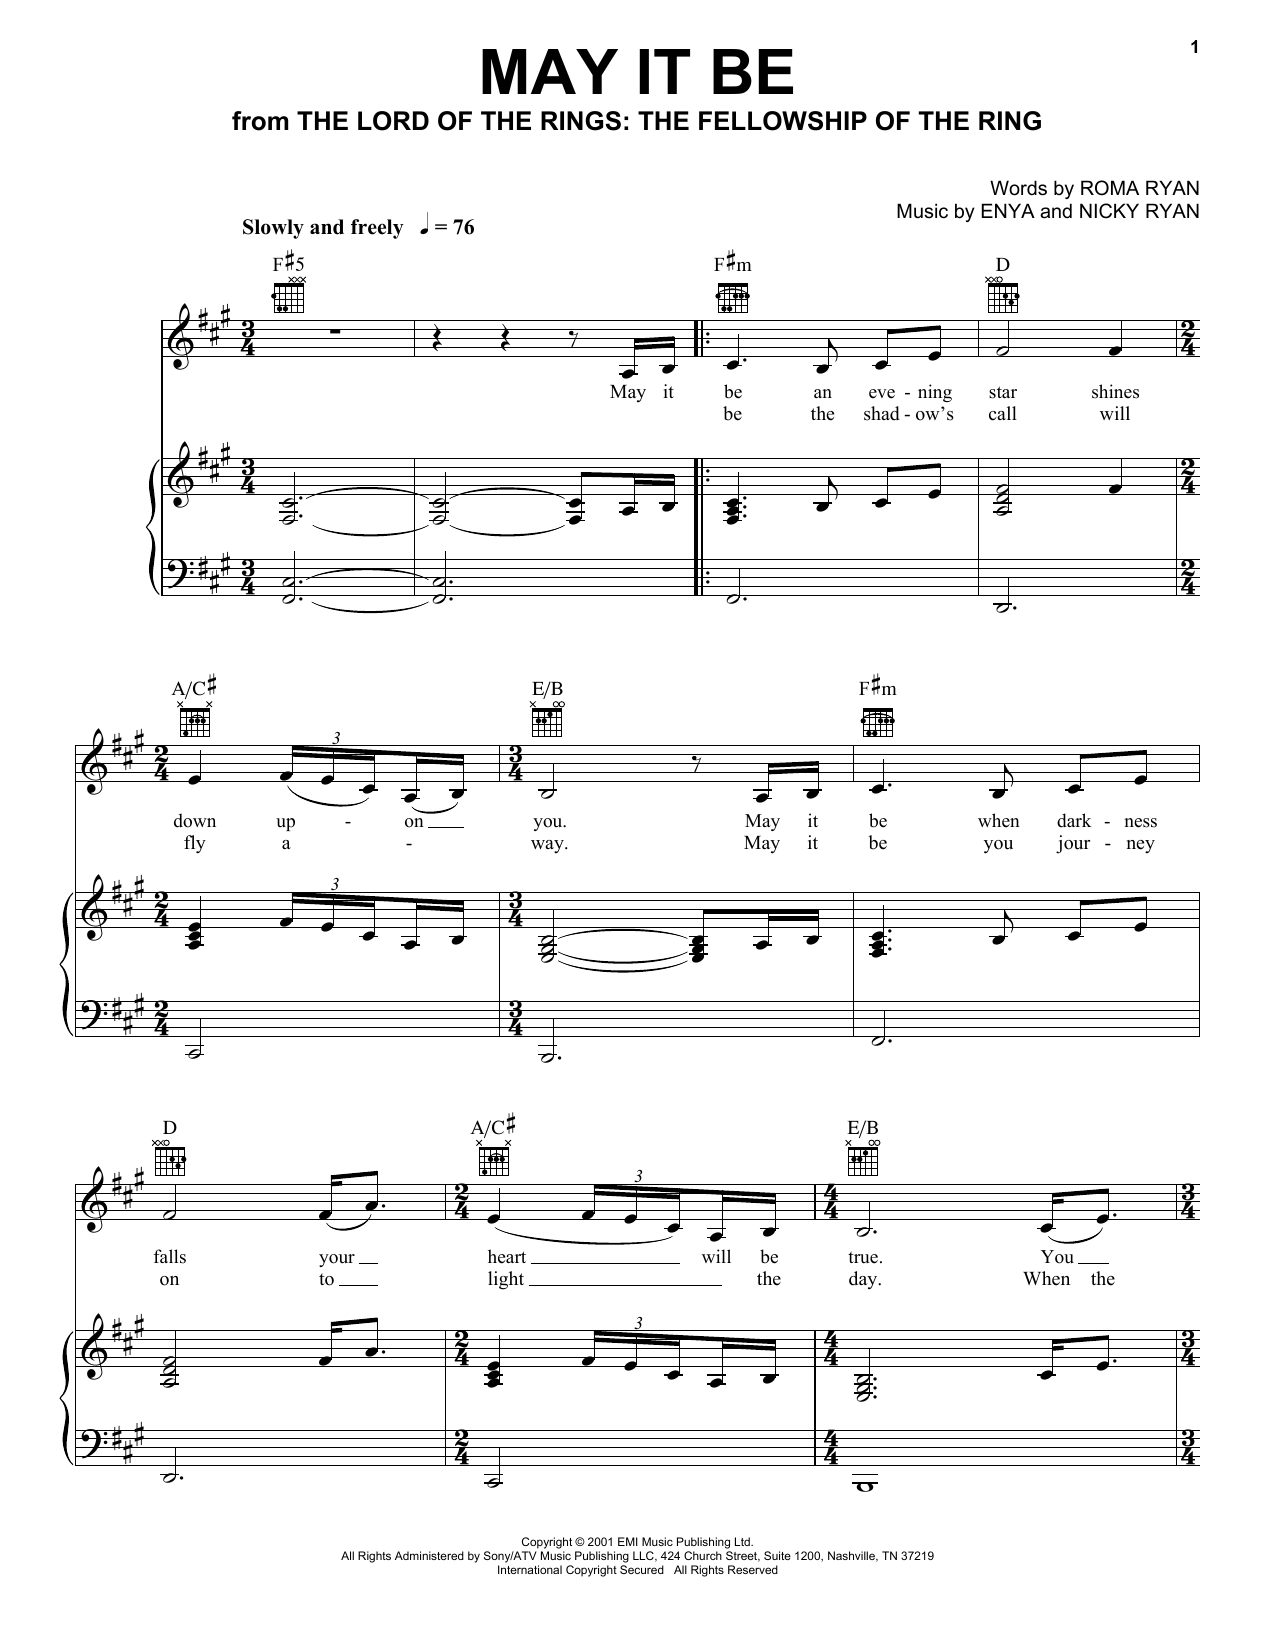 Enya May It Be Sheet Music Notes & Chords for Piano, Vocal & Guitar (Right-Hand Melody) - Download or Print PDF